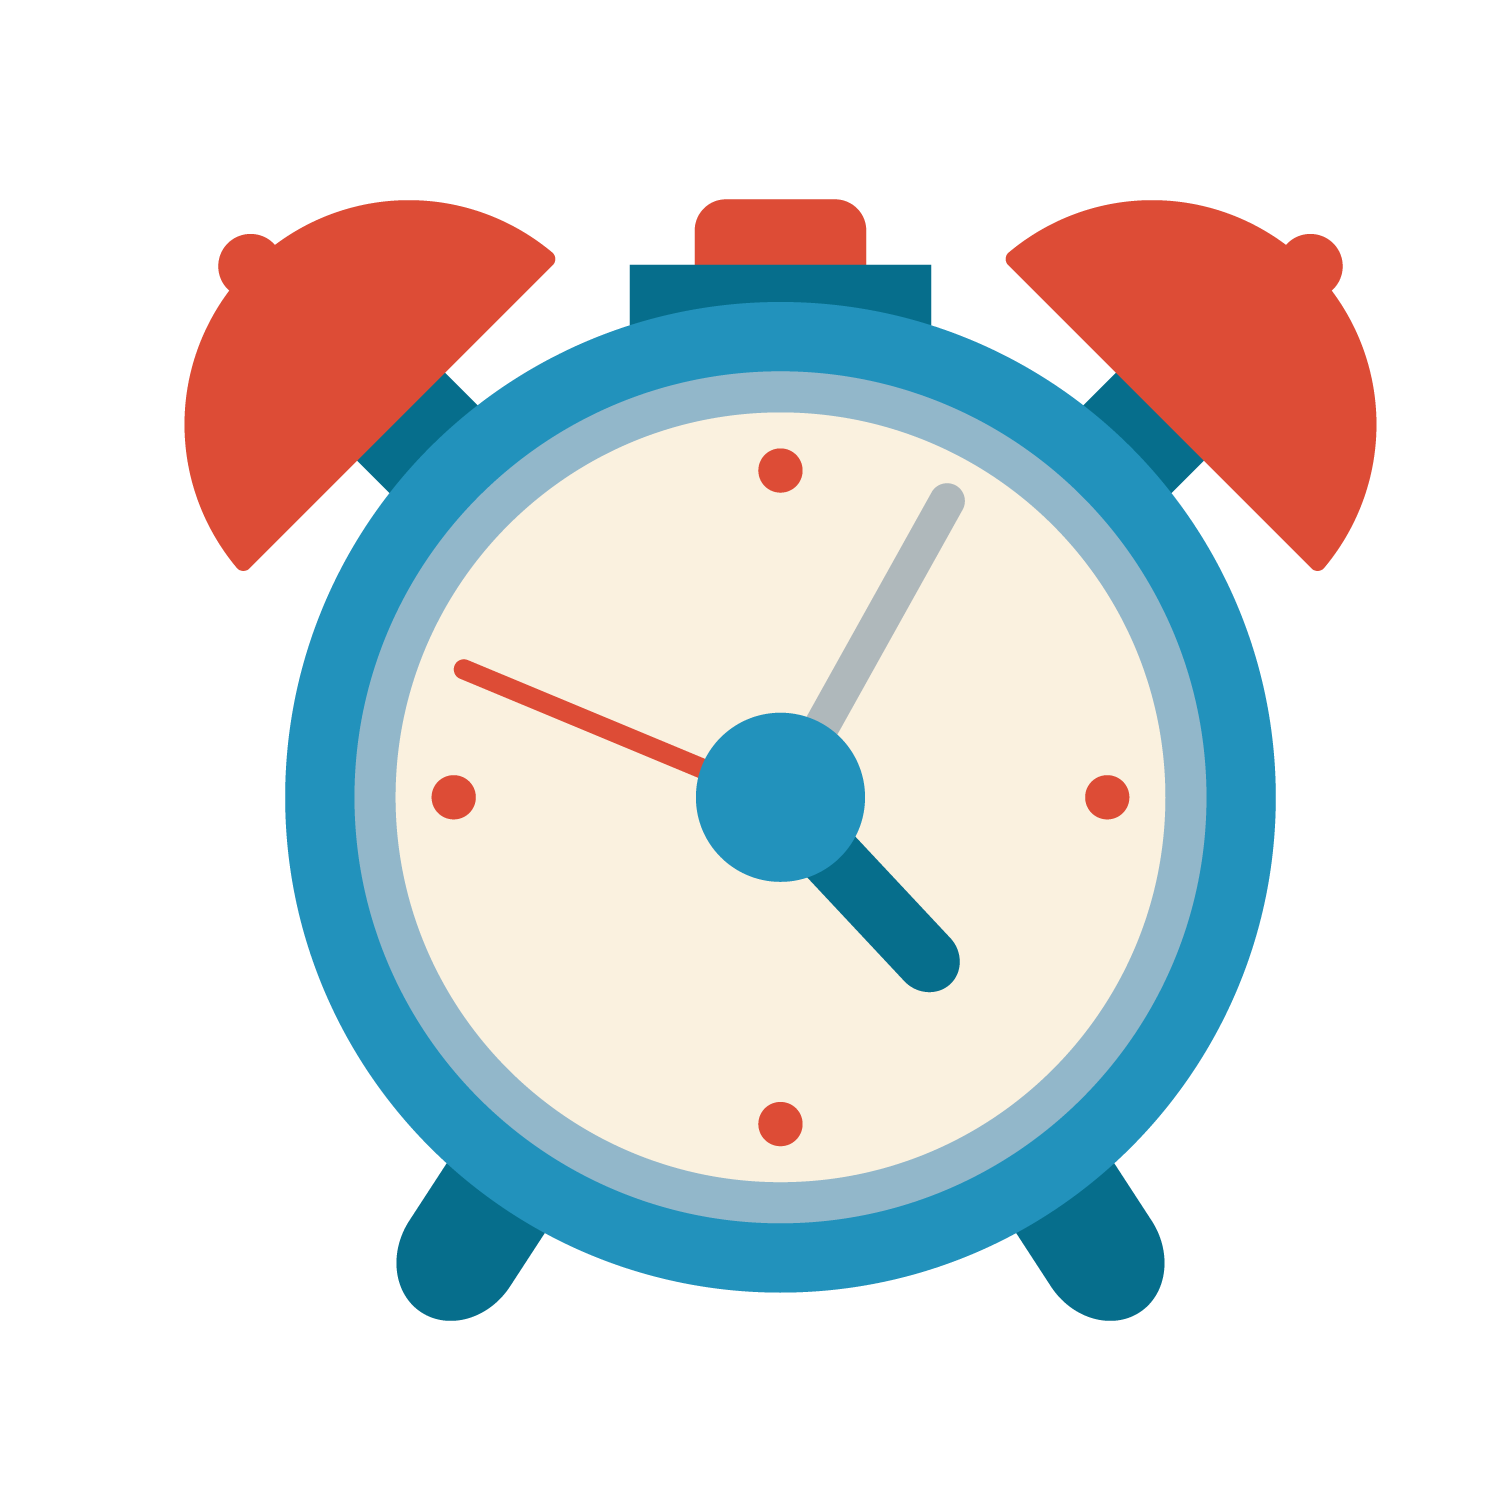 Download Alarm Area Timer Clock Free HQ Image HQ PNG Image | FreePNGImg